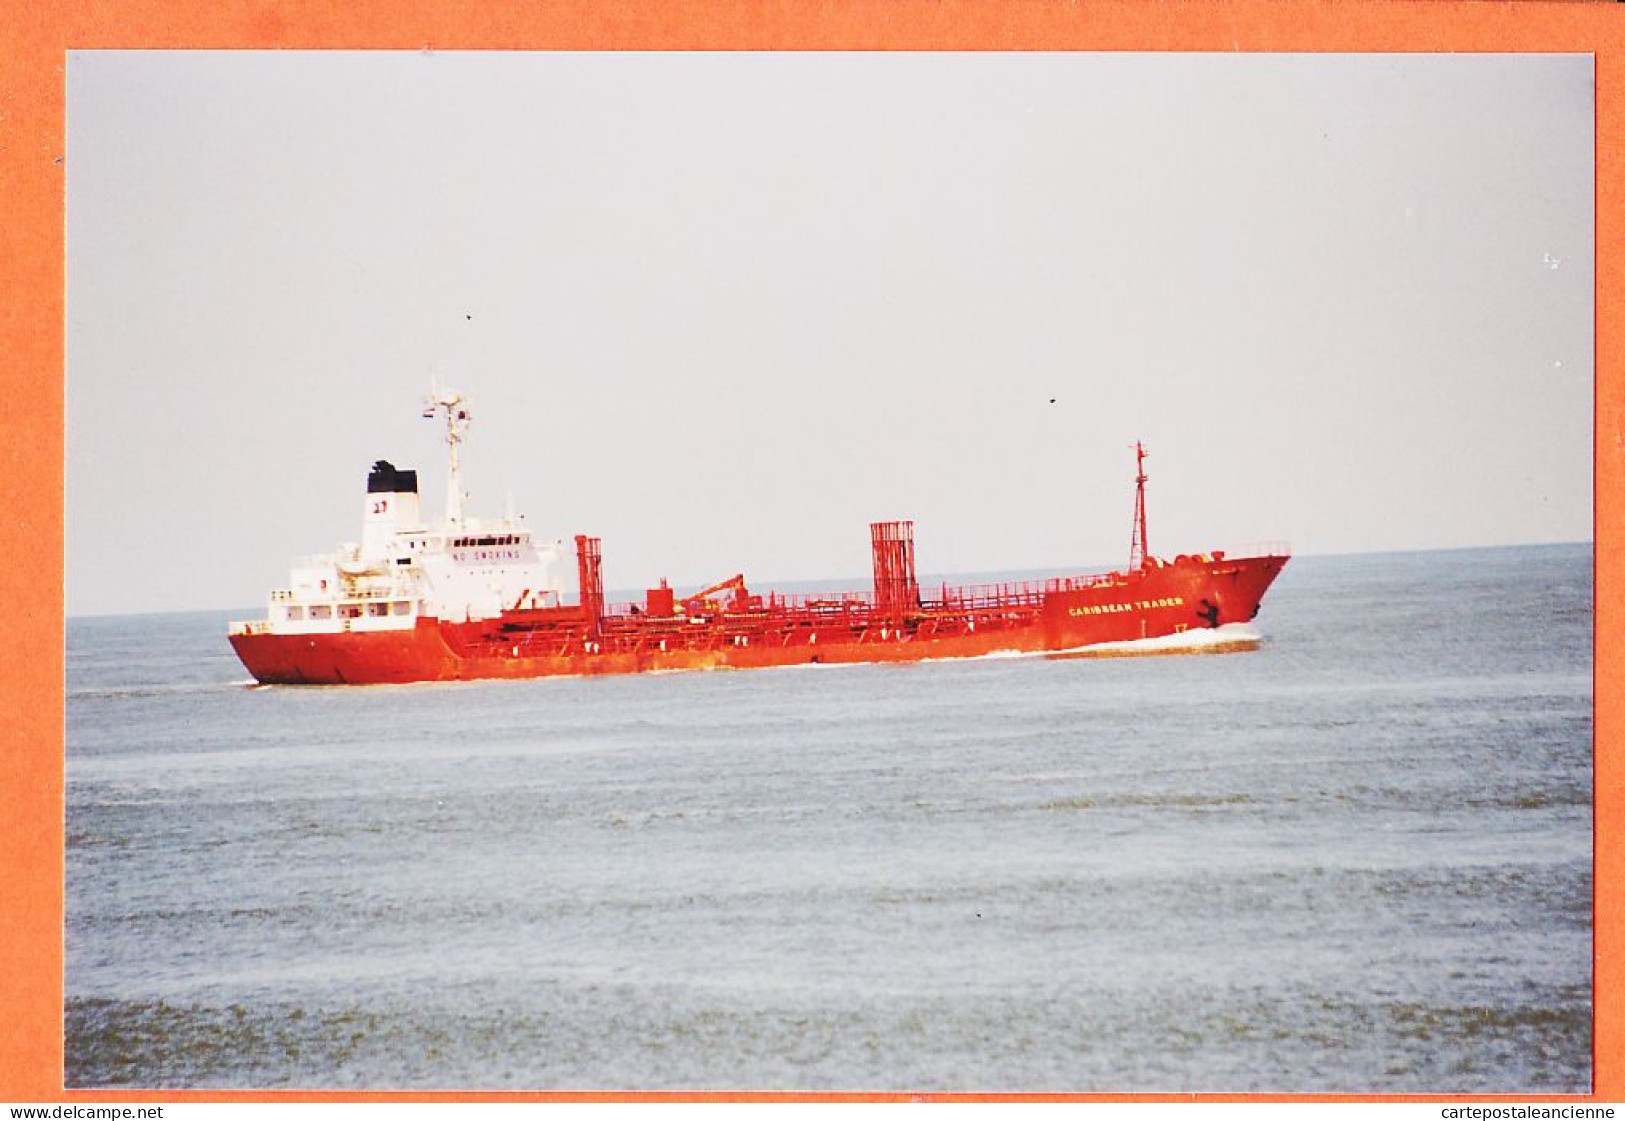 35785 / CARRIBEAN TRADER Chemical Tanker Foto GROENVELD 18-08-2000 Photographie Véritable 15x10 FUJIFILM - Schiffe